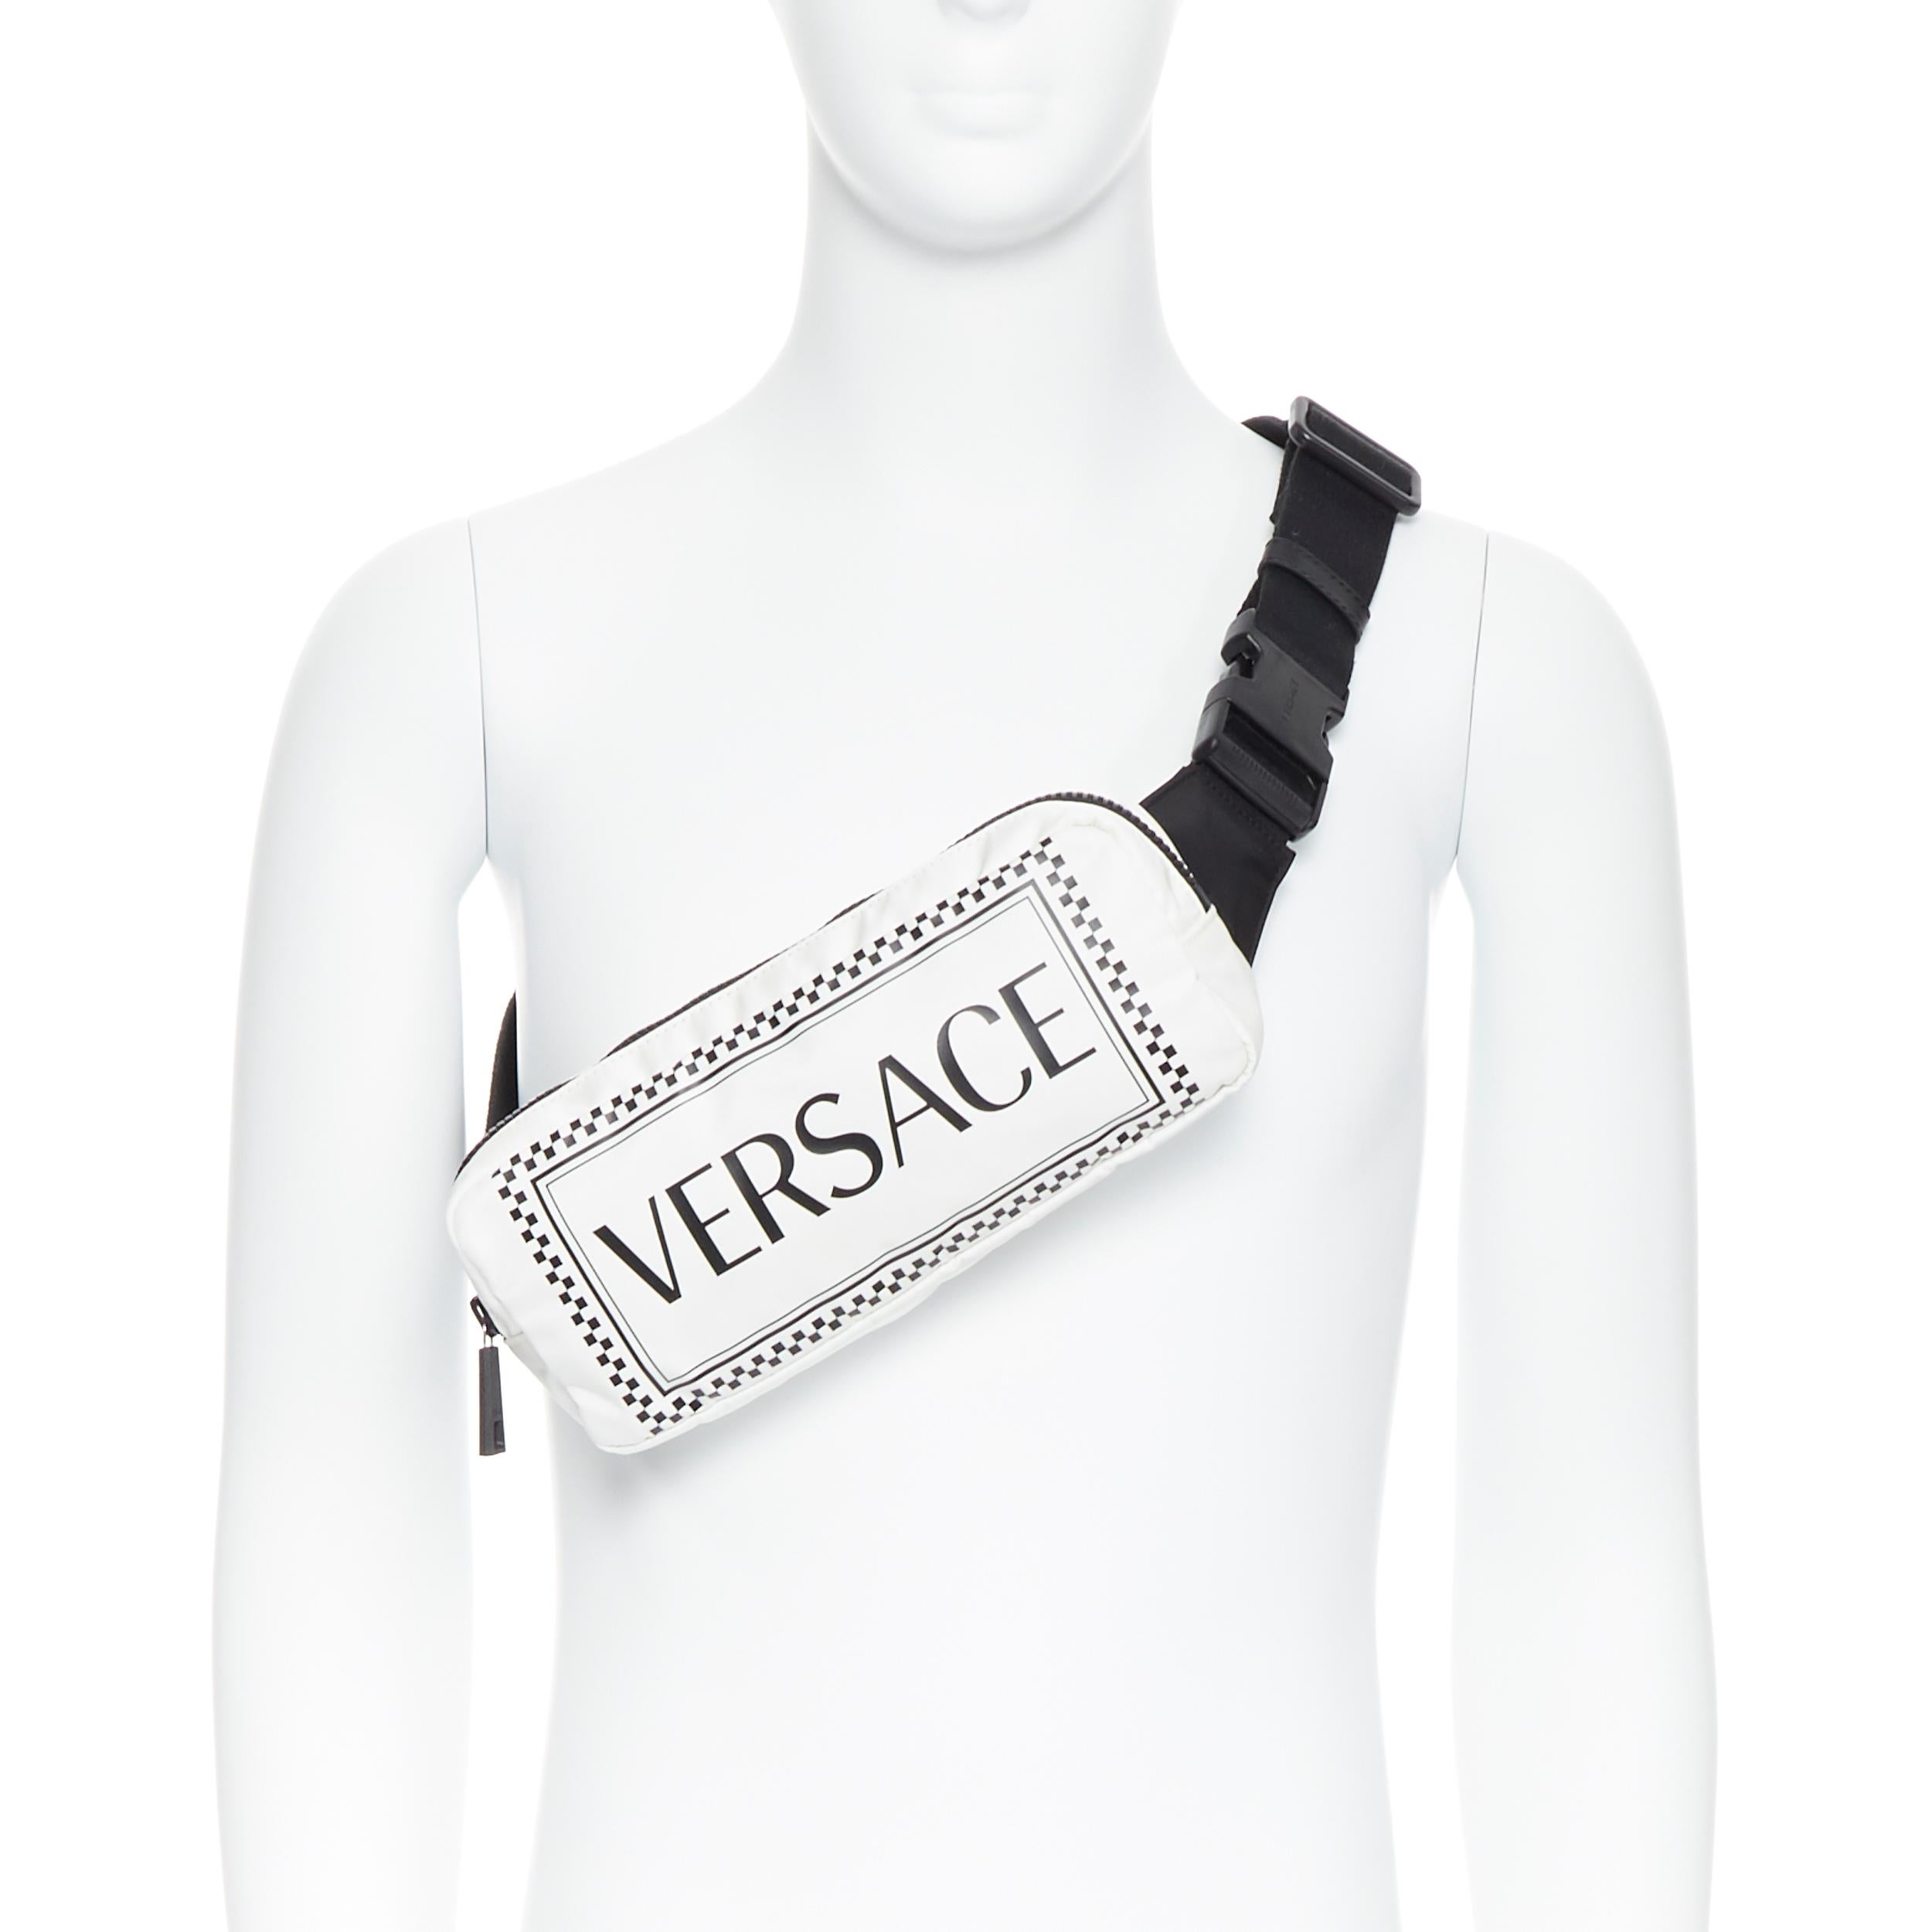 new VERSACE 90's Vintage Box Logo print white nylon crossbody waist belt bag
Brand: Versace
Designer: Donatella Versace
Collection: Pre-Fall 2019
Model Name / Style: Belt bag
Material: Nylon
Color: White
Pattern: Solid
Closure: Zip
Extra Detail: